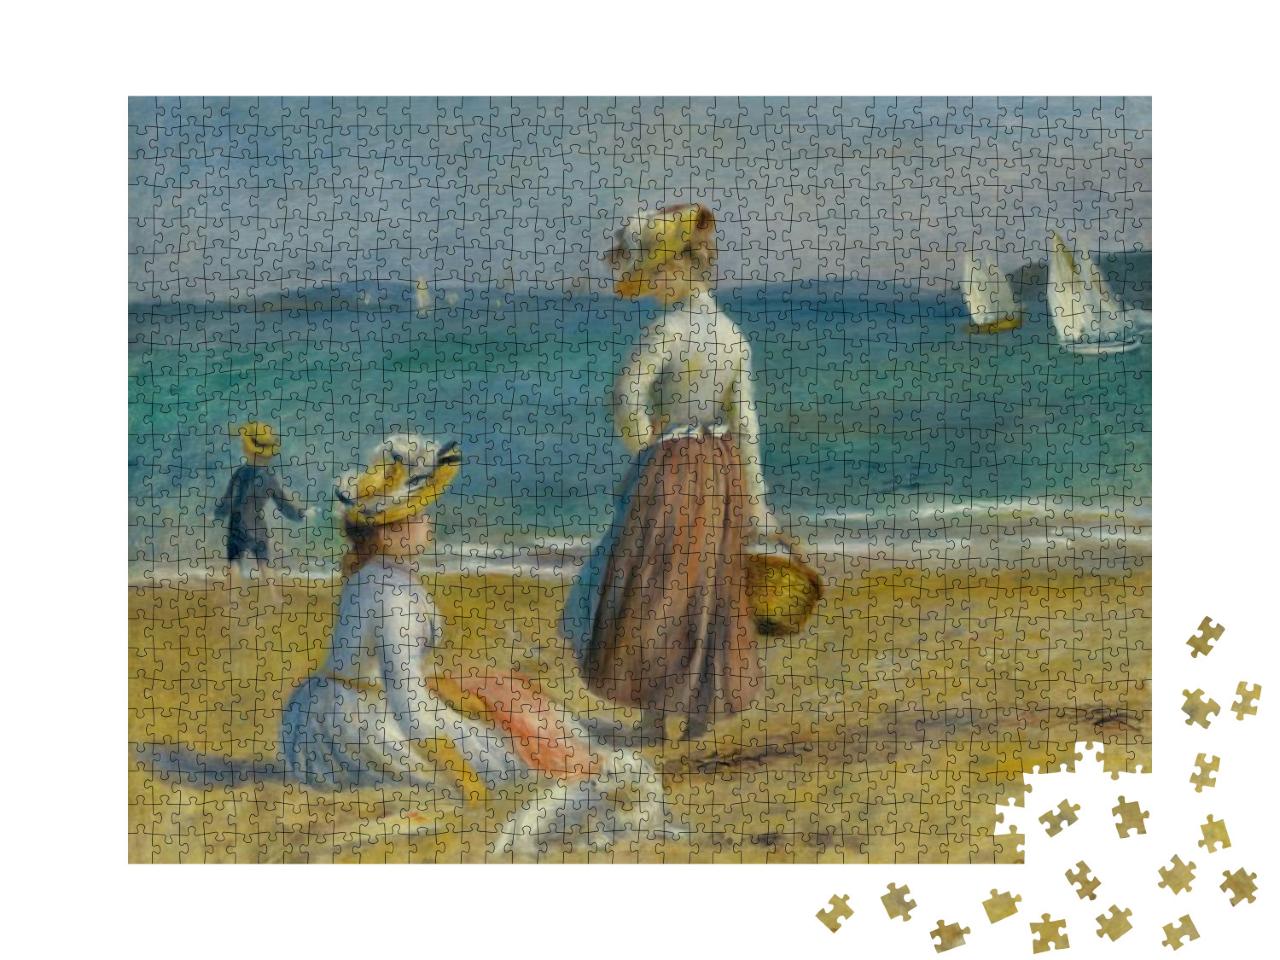 Puzzle 1000 Teile „Figuren am Strand, Auguste Renoir 1890“